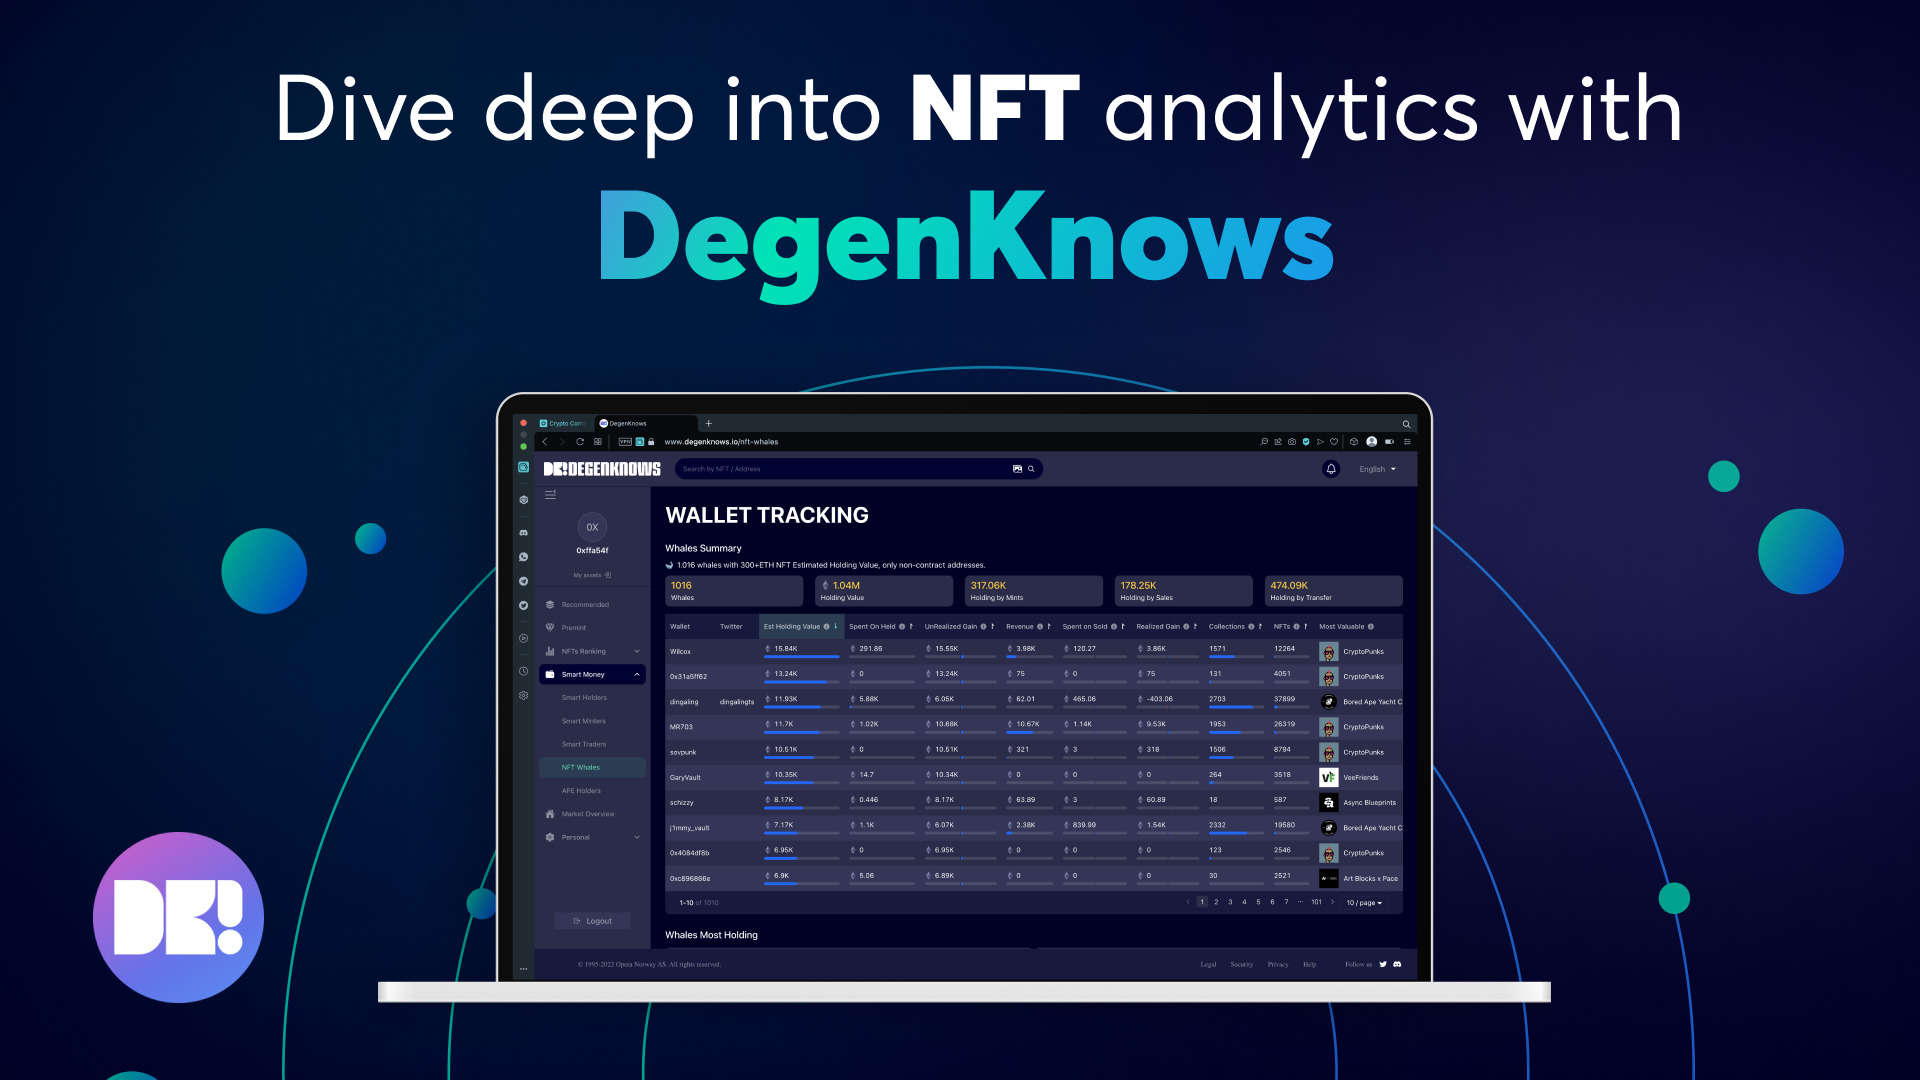 DegenKnows is Opera's new NFT deep analytics platform